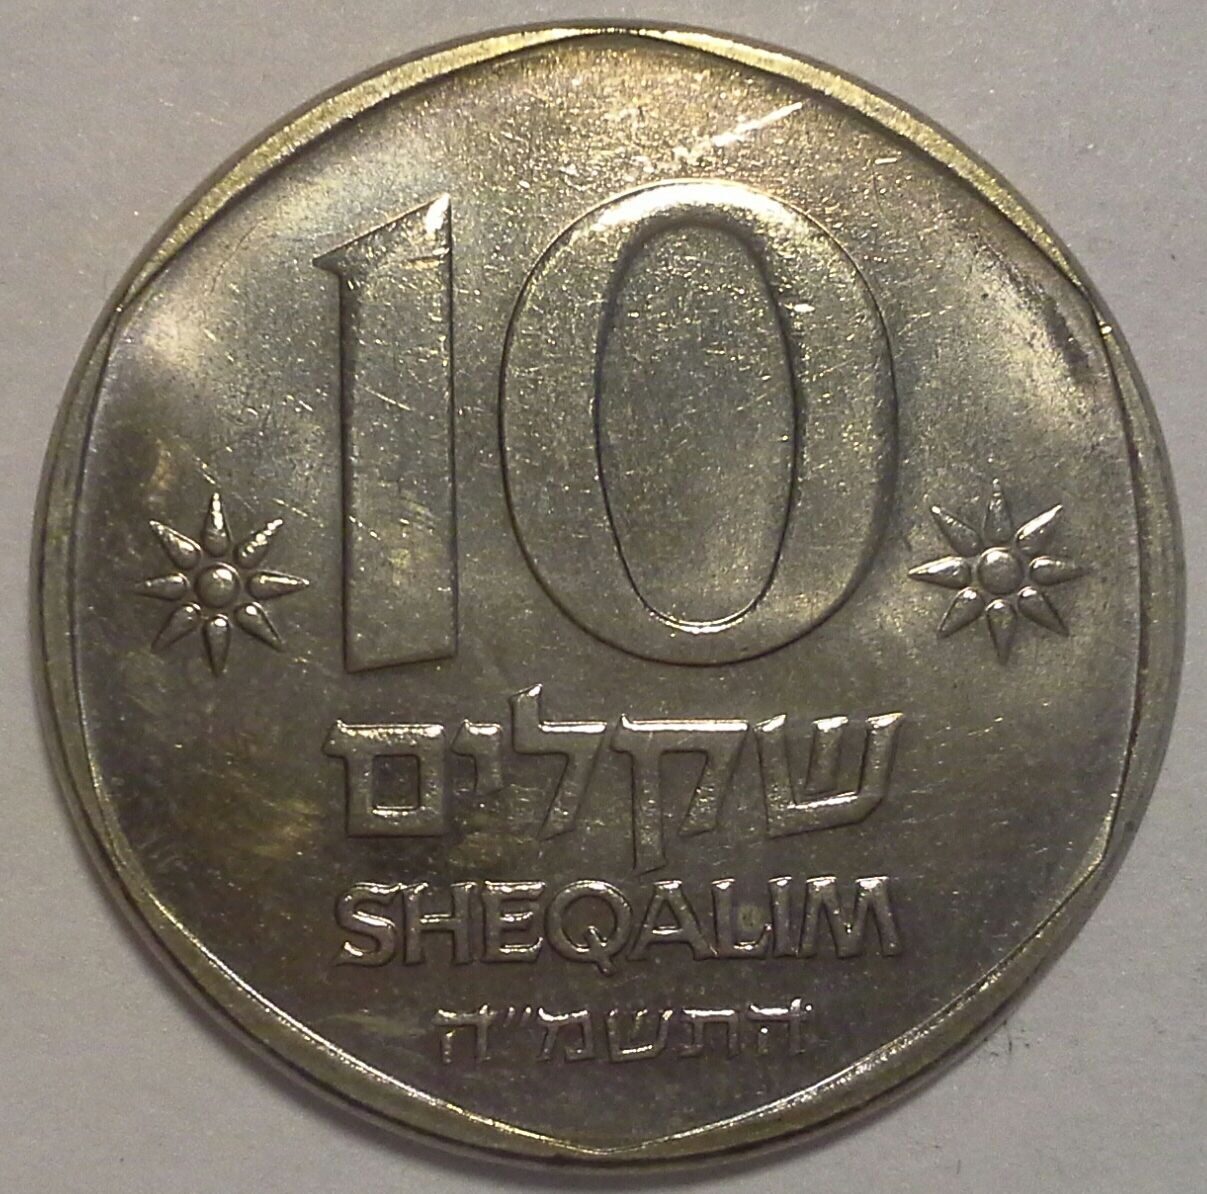 10 Шекелей 1985. 10 Шекелей фото. 10 Шекелей монета. 2 Шекеля в рублях. 70 шекелей